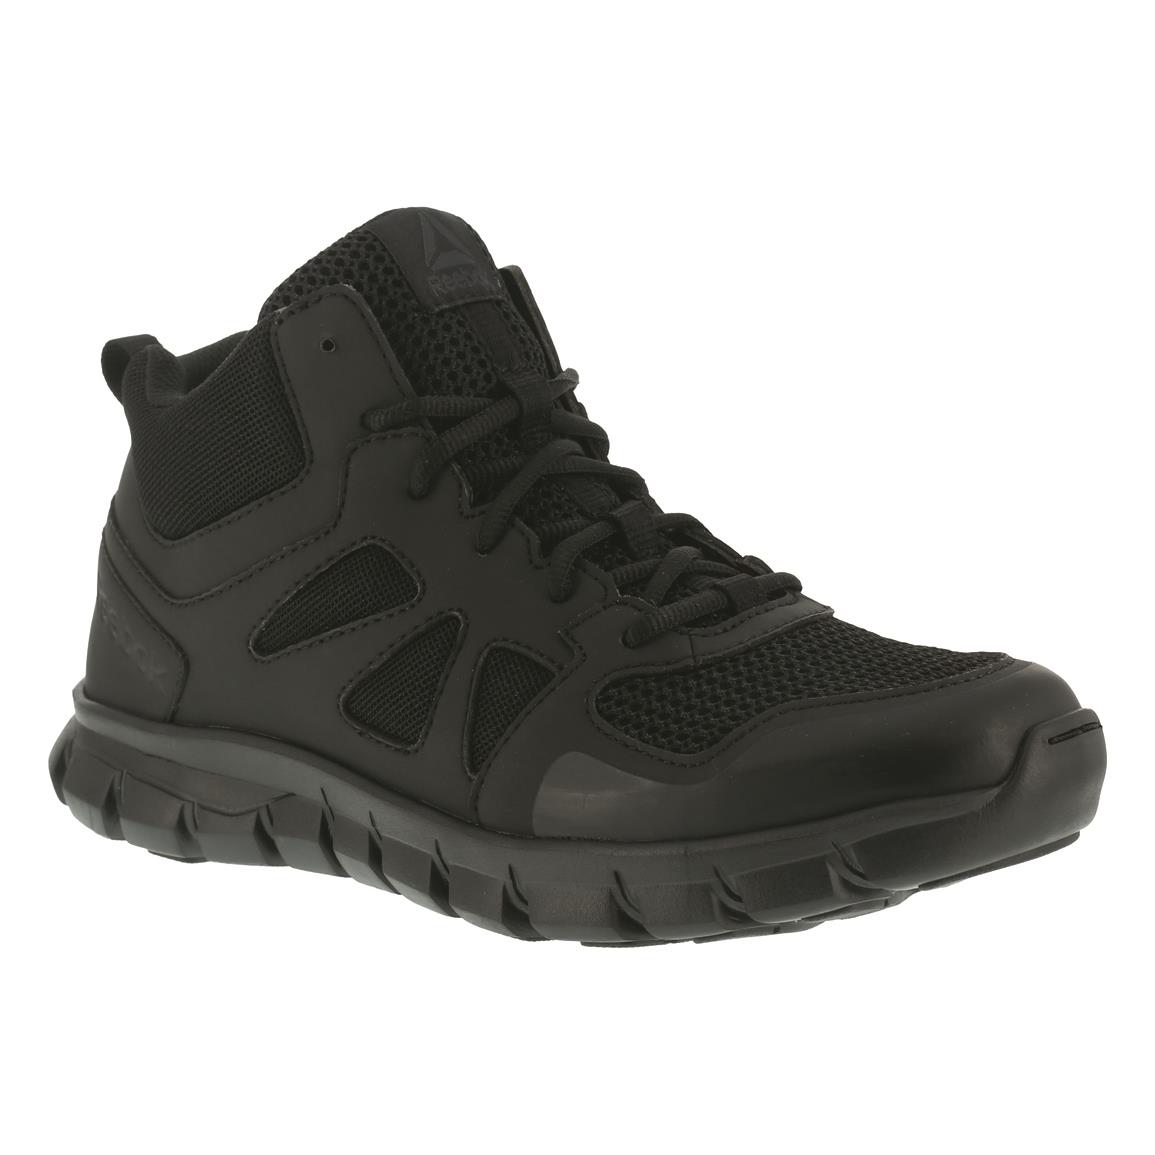 Reebok Sublite Cushion Men's 4" Tactical Boots, Black